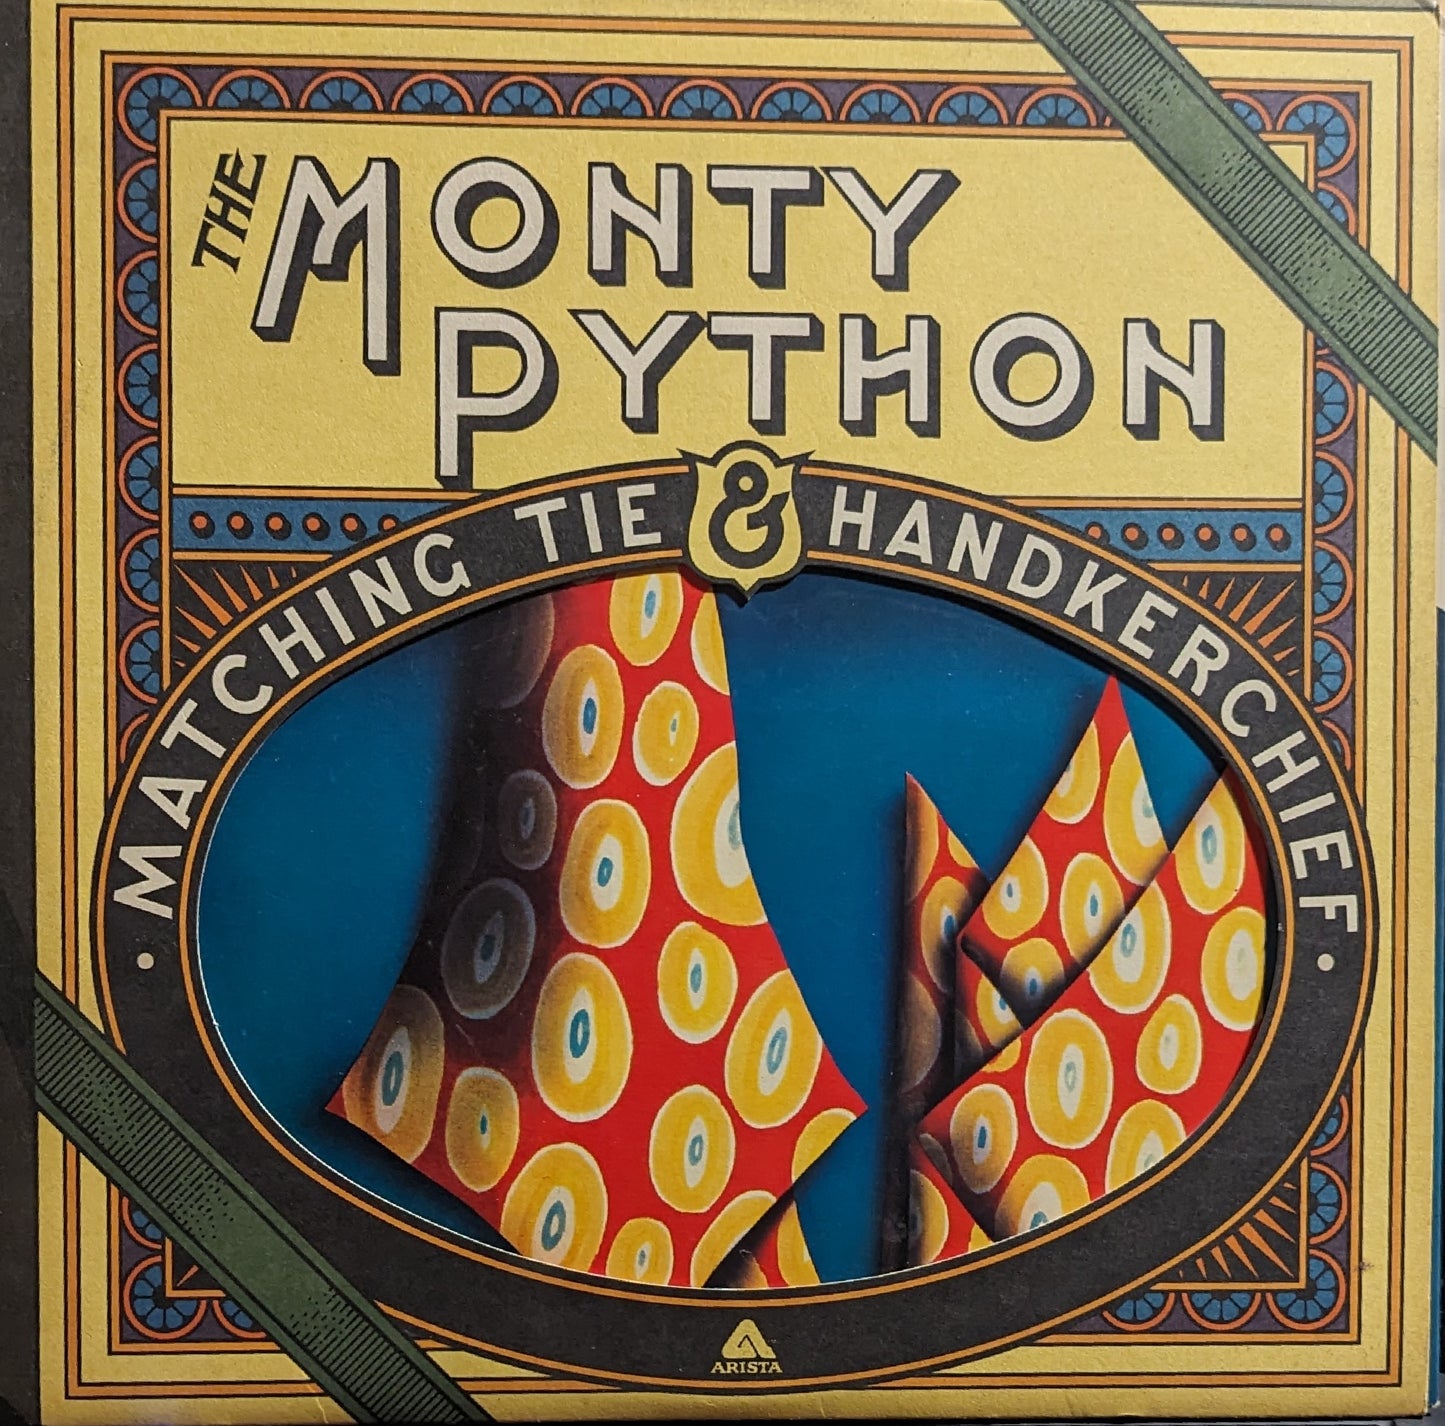 Monty Python The Monty Python Matching Tie And Handkerchief LP Excellent (EX) Near Mint (NM or M-)